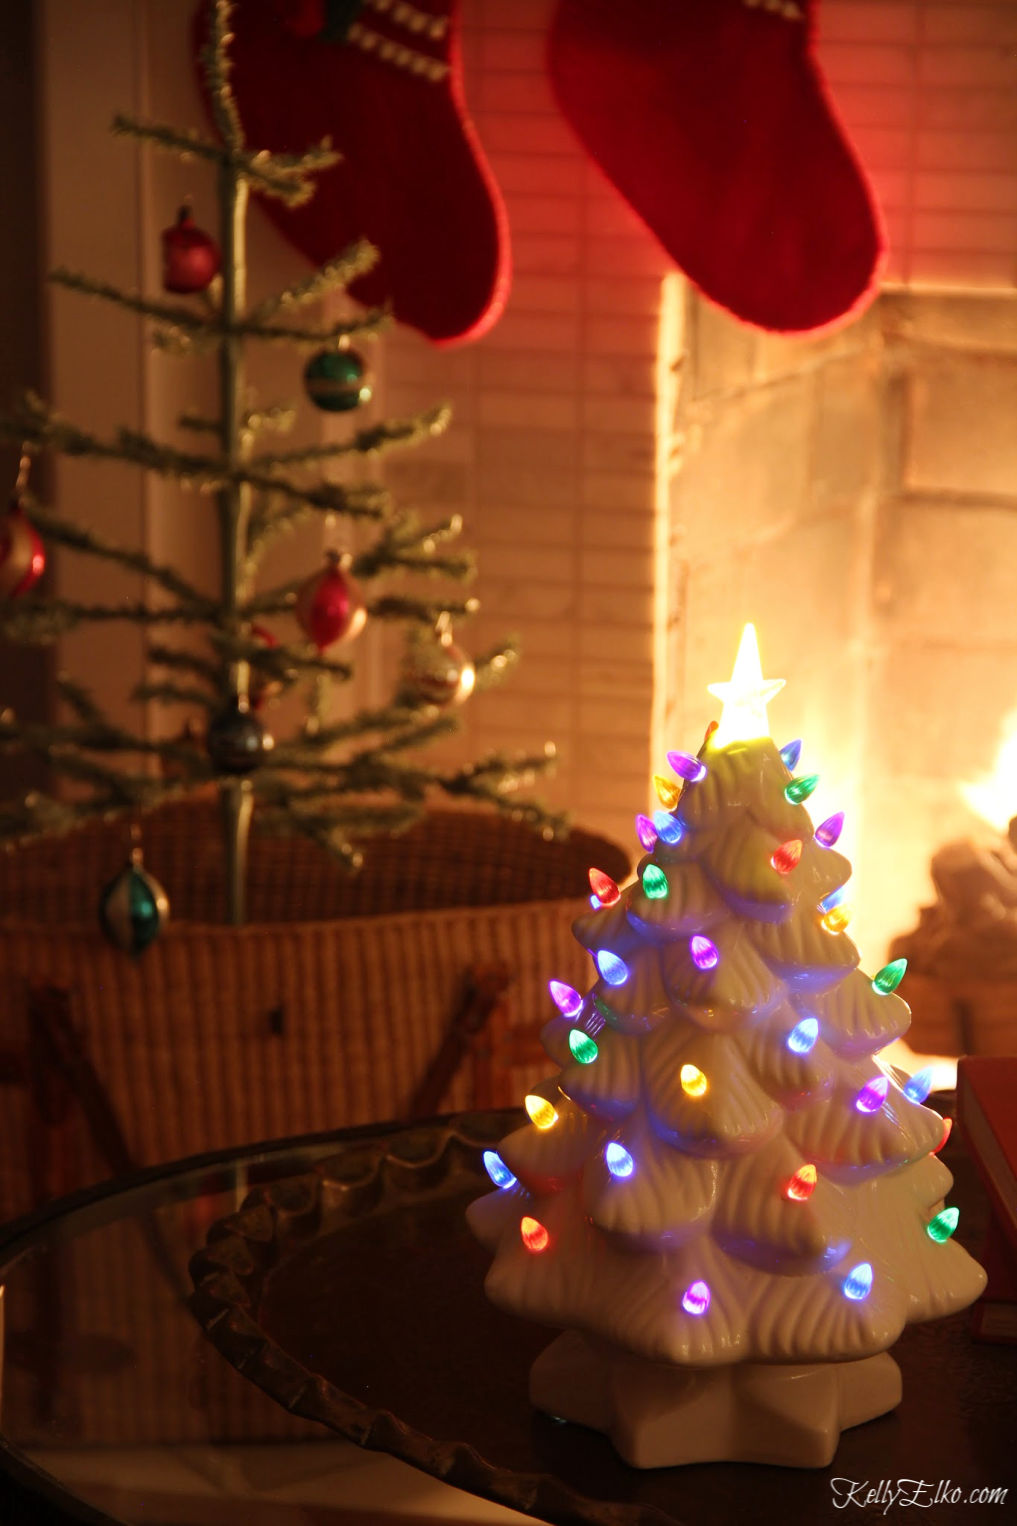 Love this vintage inspired ceramic light up Christmas tree kellyelko.com #christmasdecor #christmastree #vintagechristmas #feathertree #farmhousechristmas #cozychristmas #christmasnightstour #kellyelko